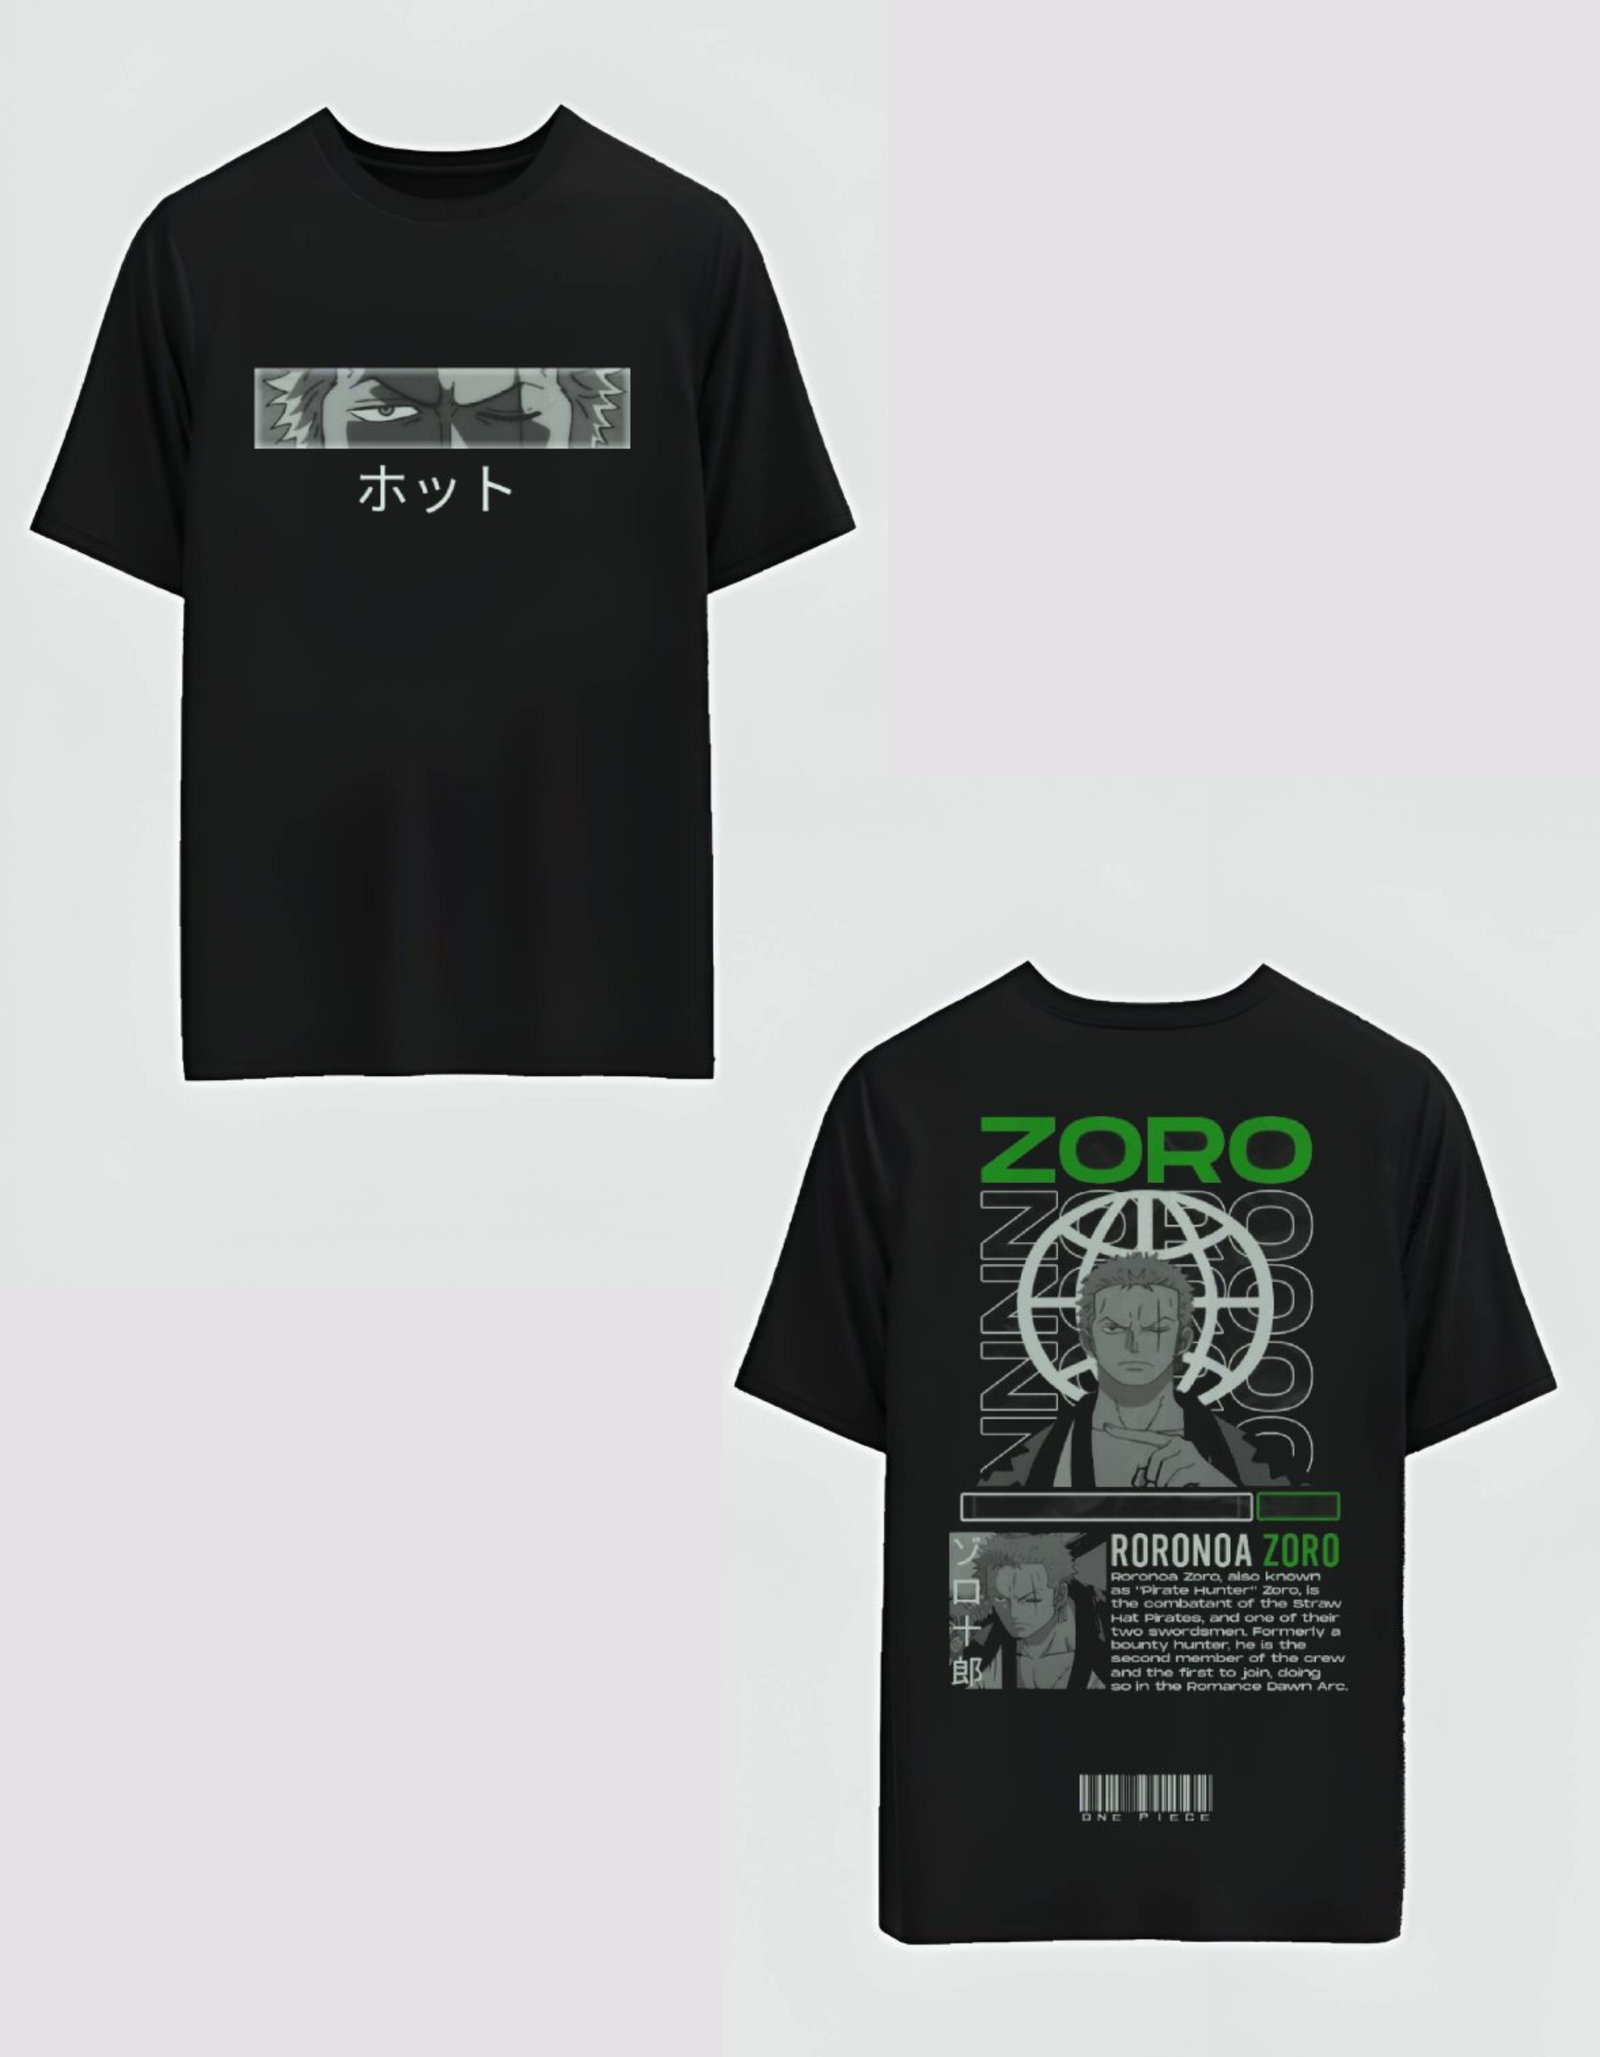 Roronoa Zoro - One Piece Dual Print Oversized T-shirt - AnimexSchool